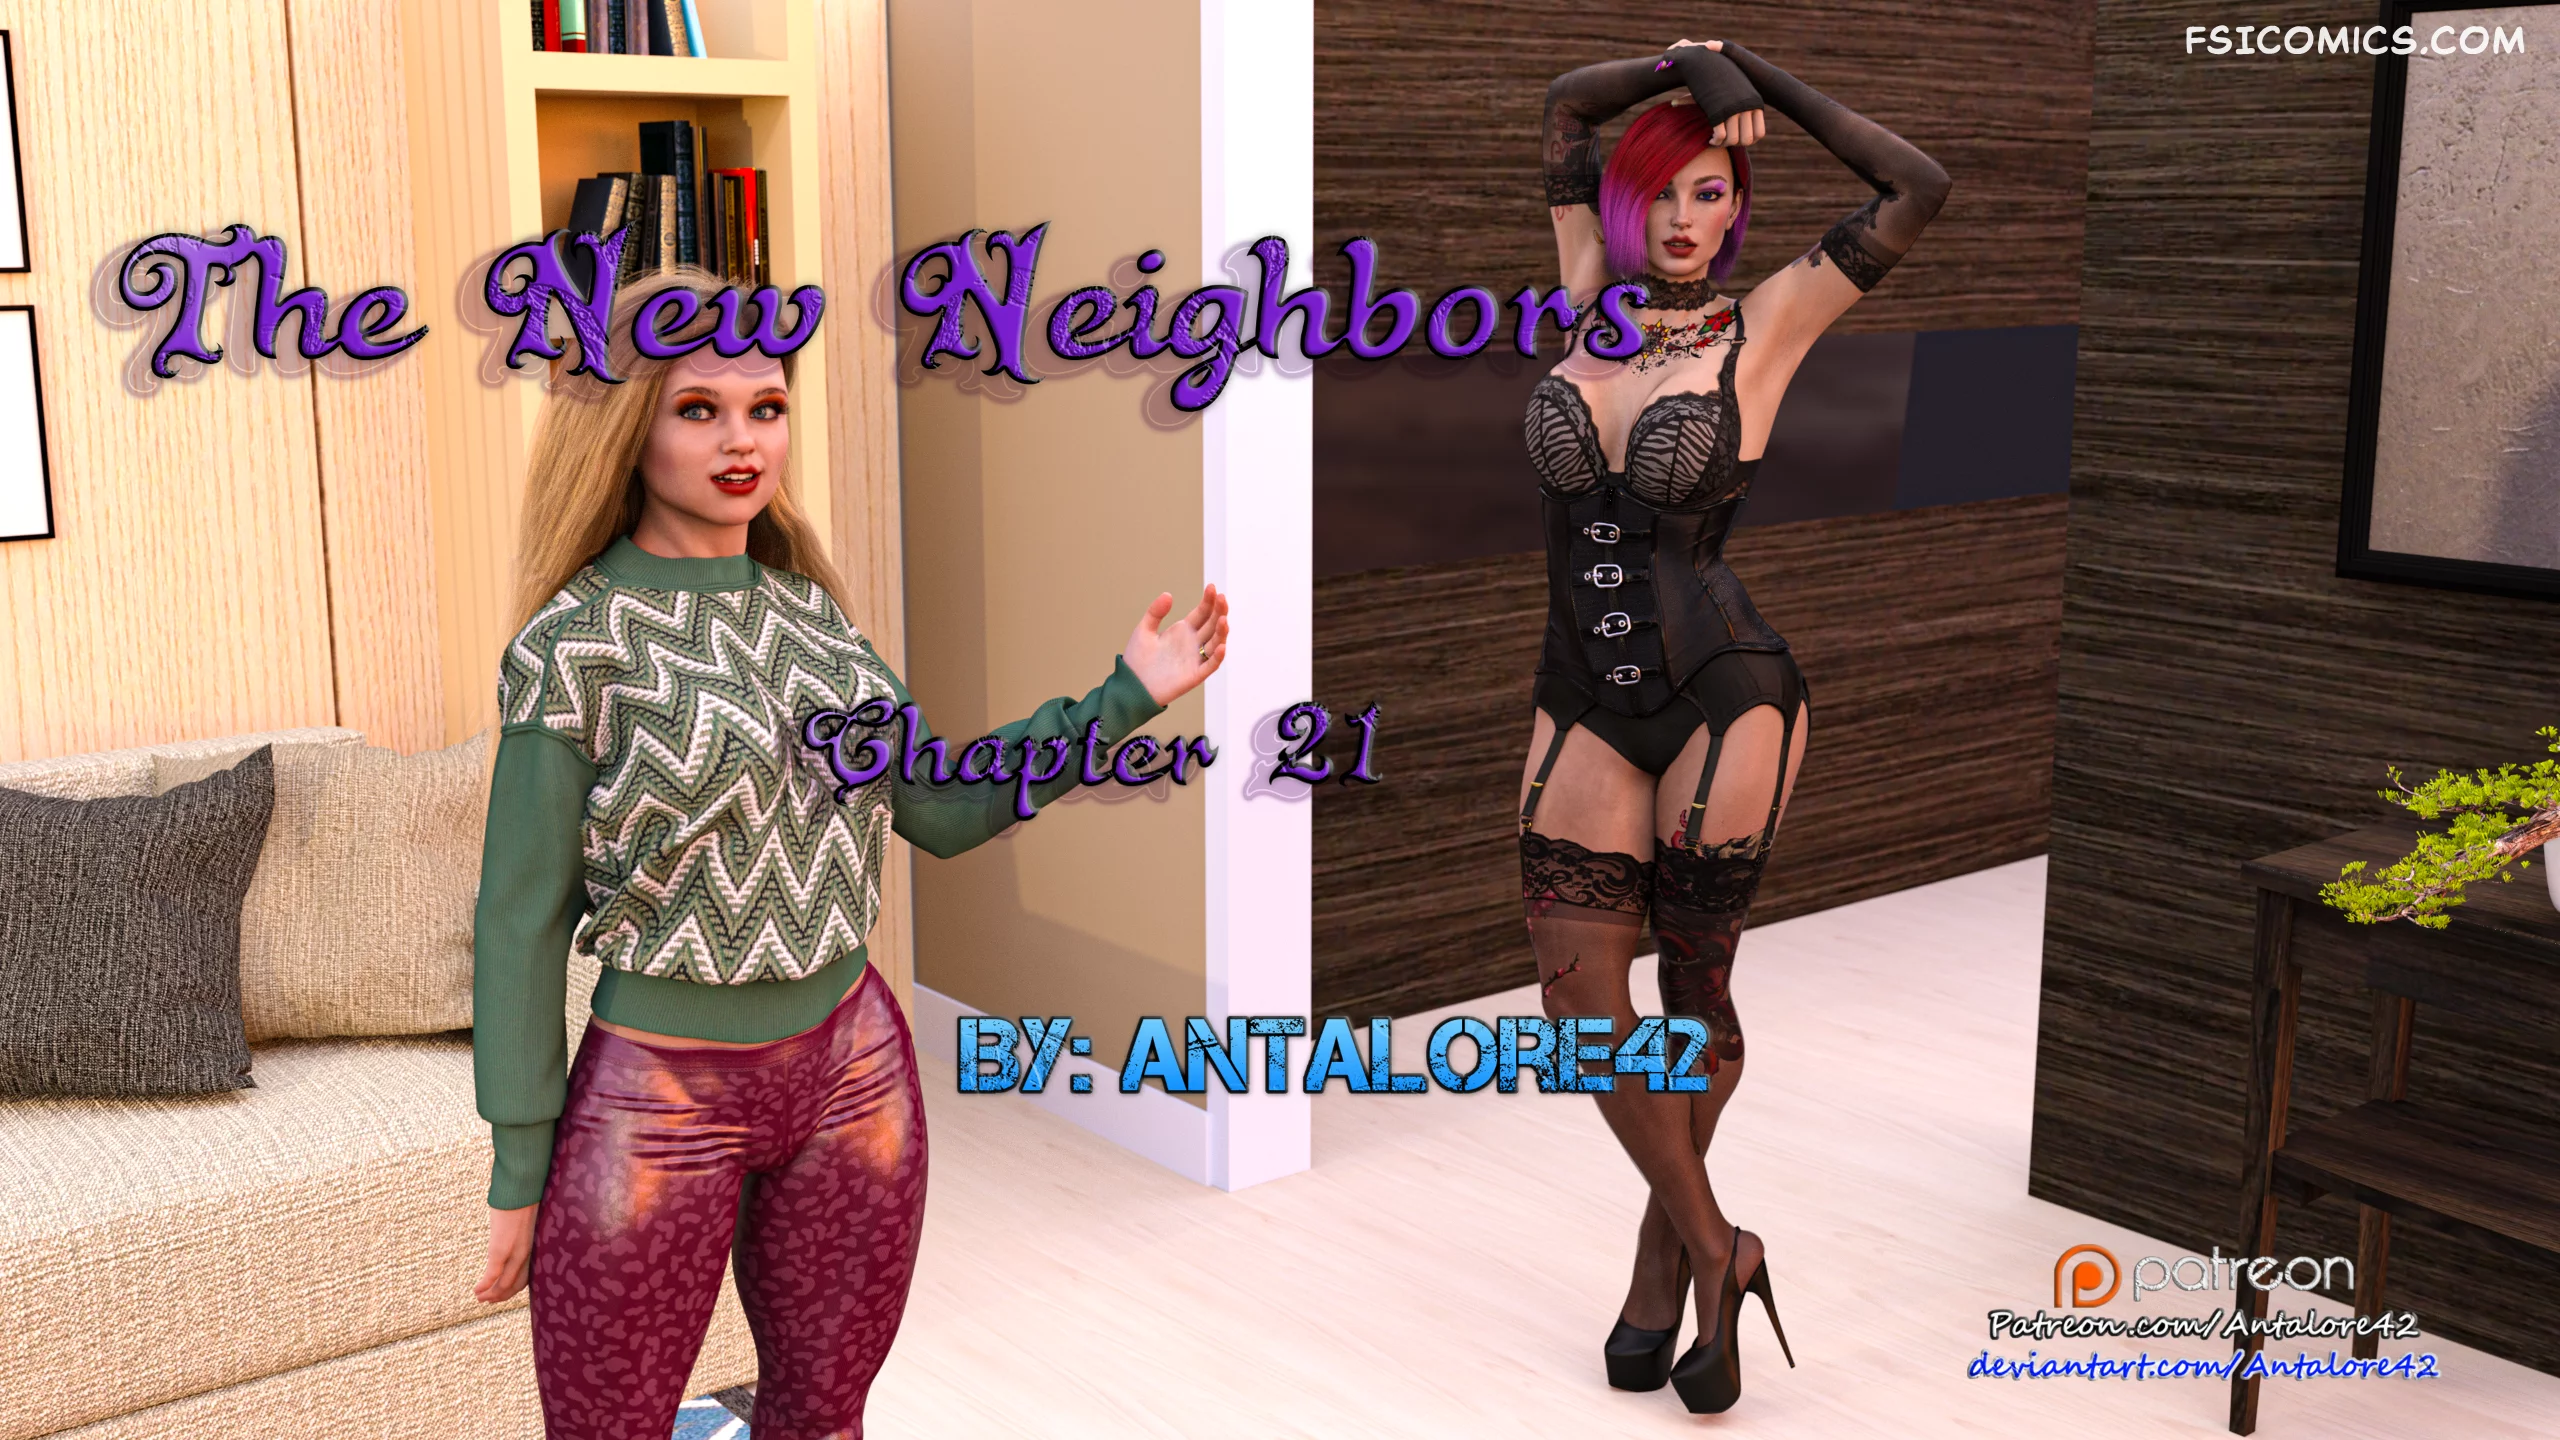 The New Neighbors Chapter 21 – Antalore42 - 97 - FSIComics